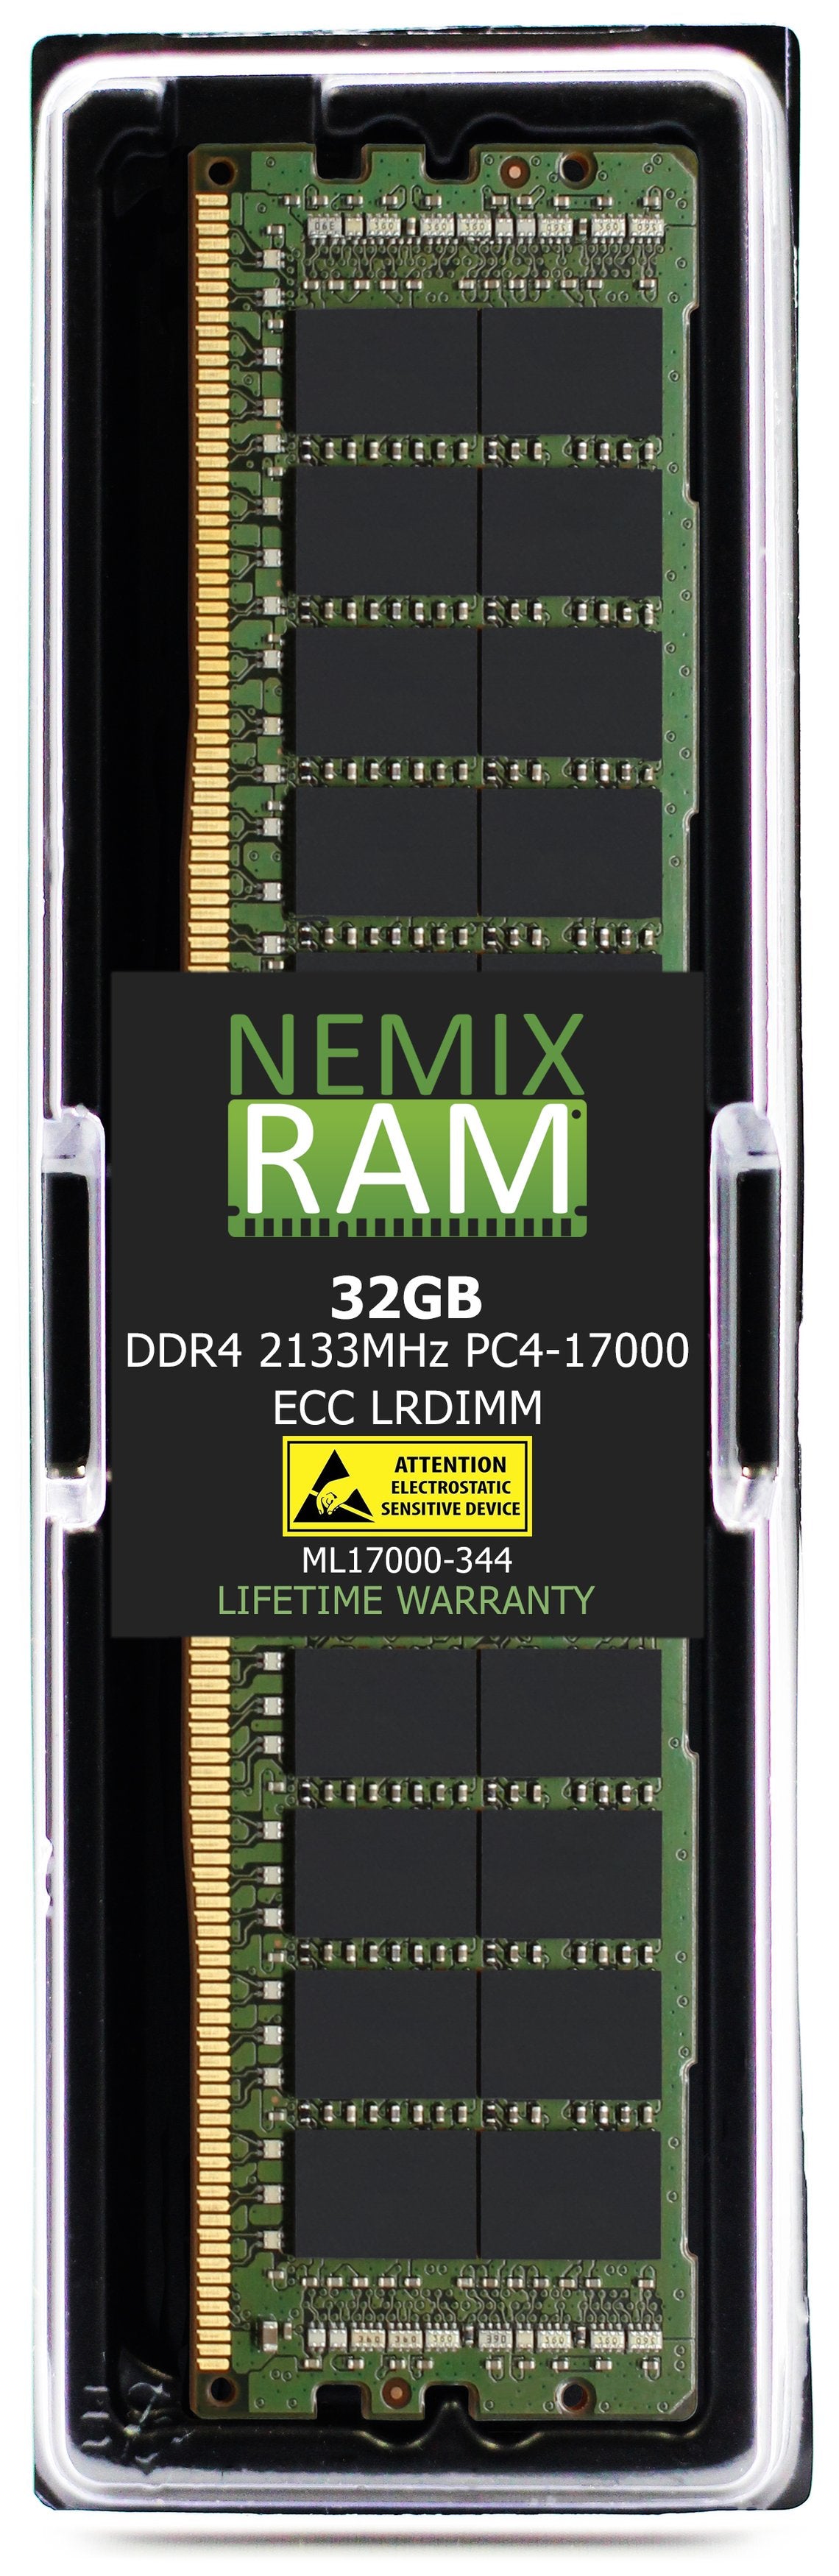 NEC Express5800 E120f-M Memory Module N8102-629F 32GBDDR4 2133MHZ PC4-17000 LRDIMM